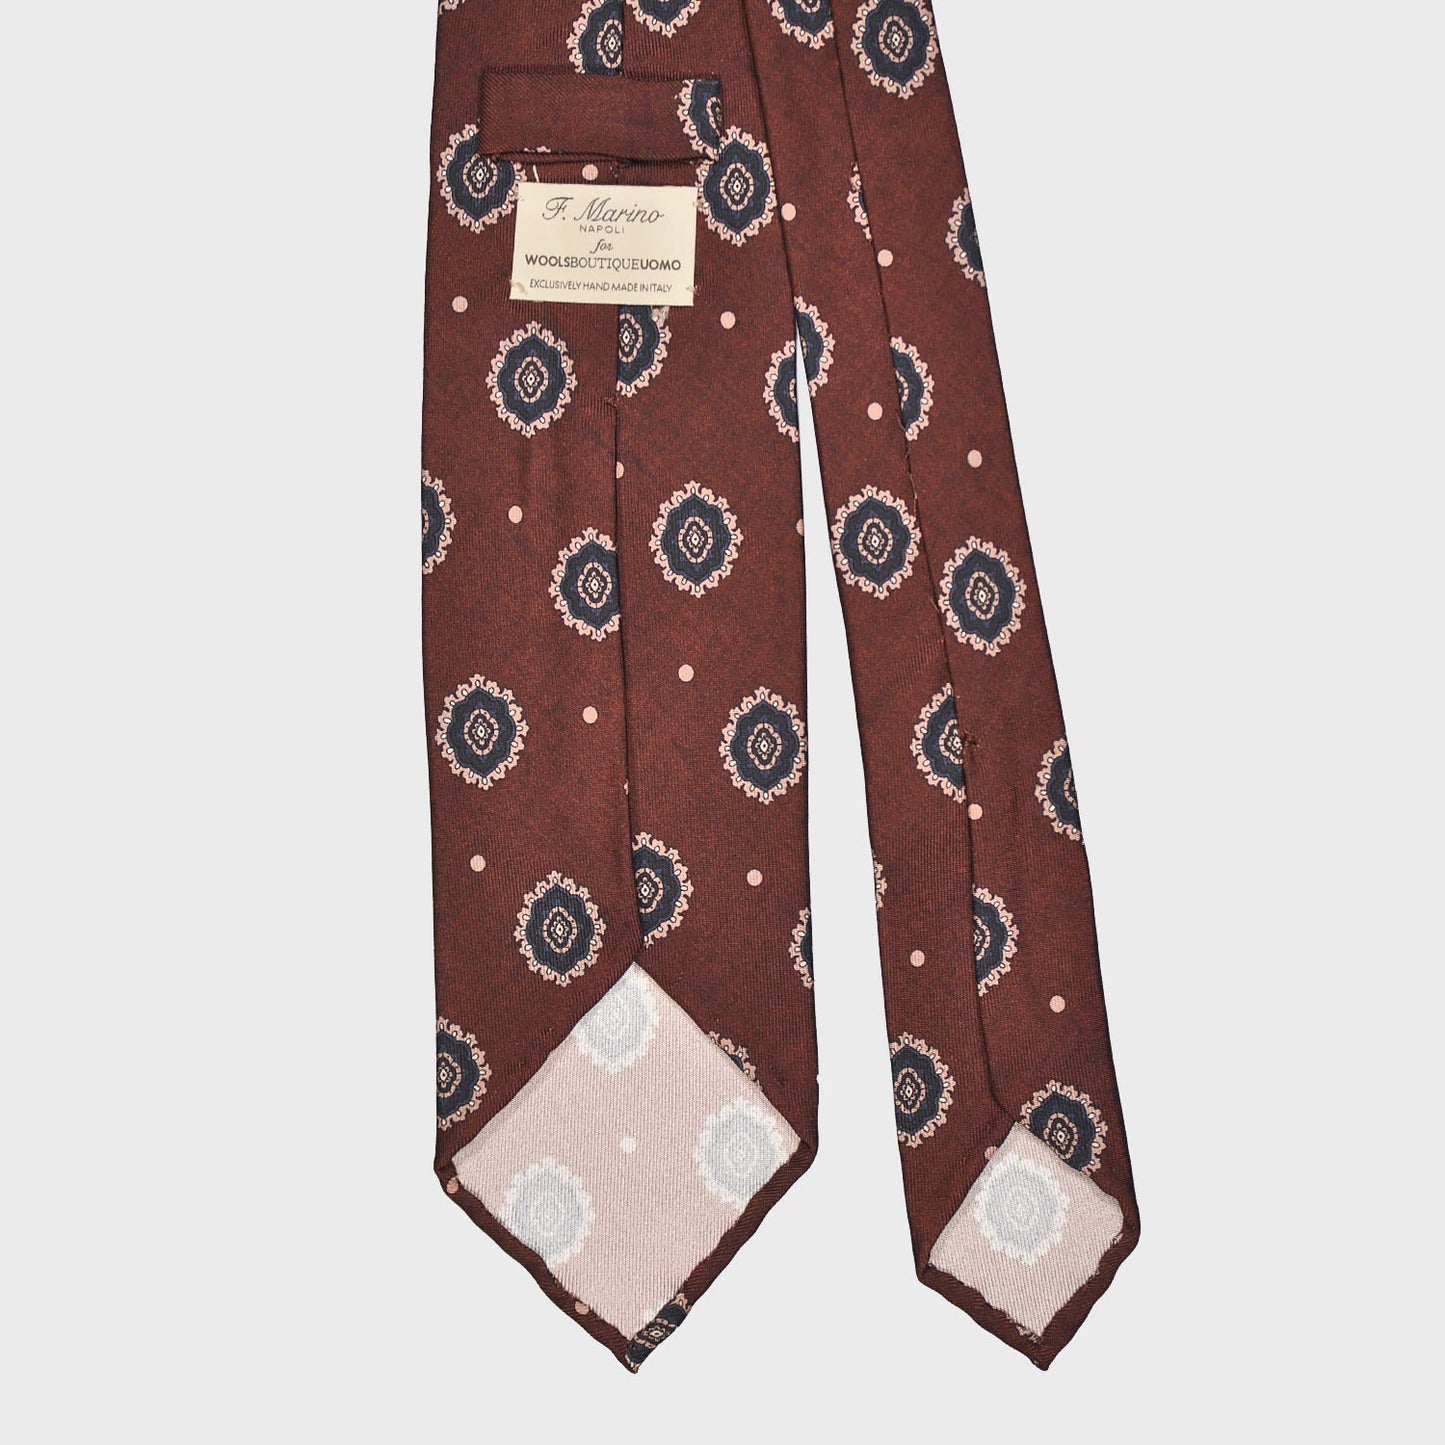 F.Marino Satin Silk Tie 3 Folds Medallions Chocolate Brown-Wools Boutique Uomo